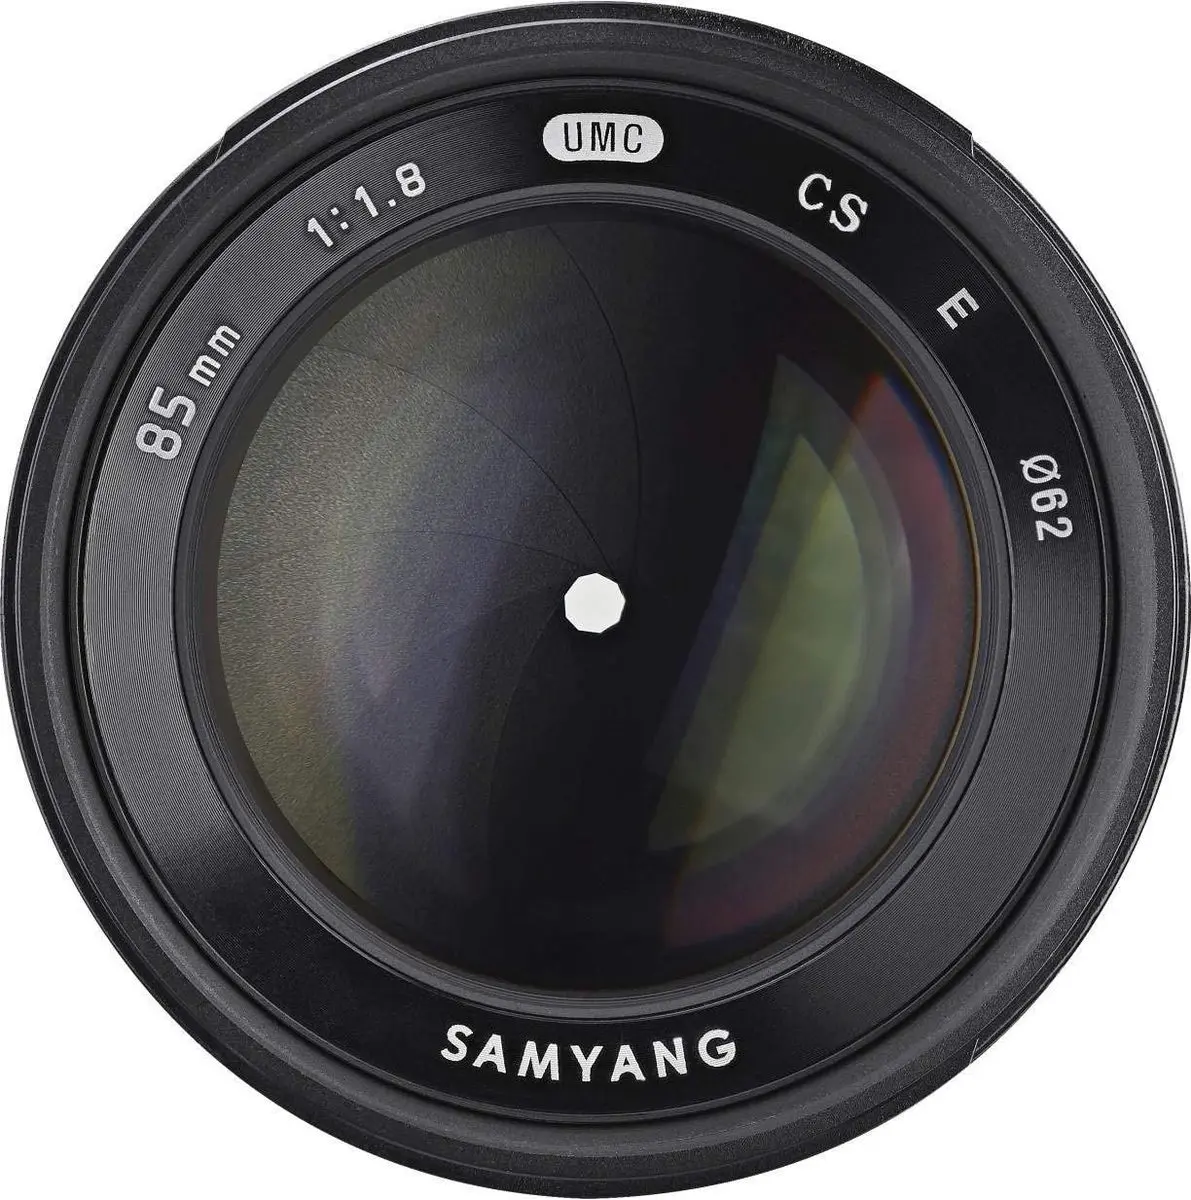 5. Samyang 85mm f/1.8 ED UMC CS (M4/3) Lens